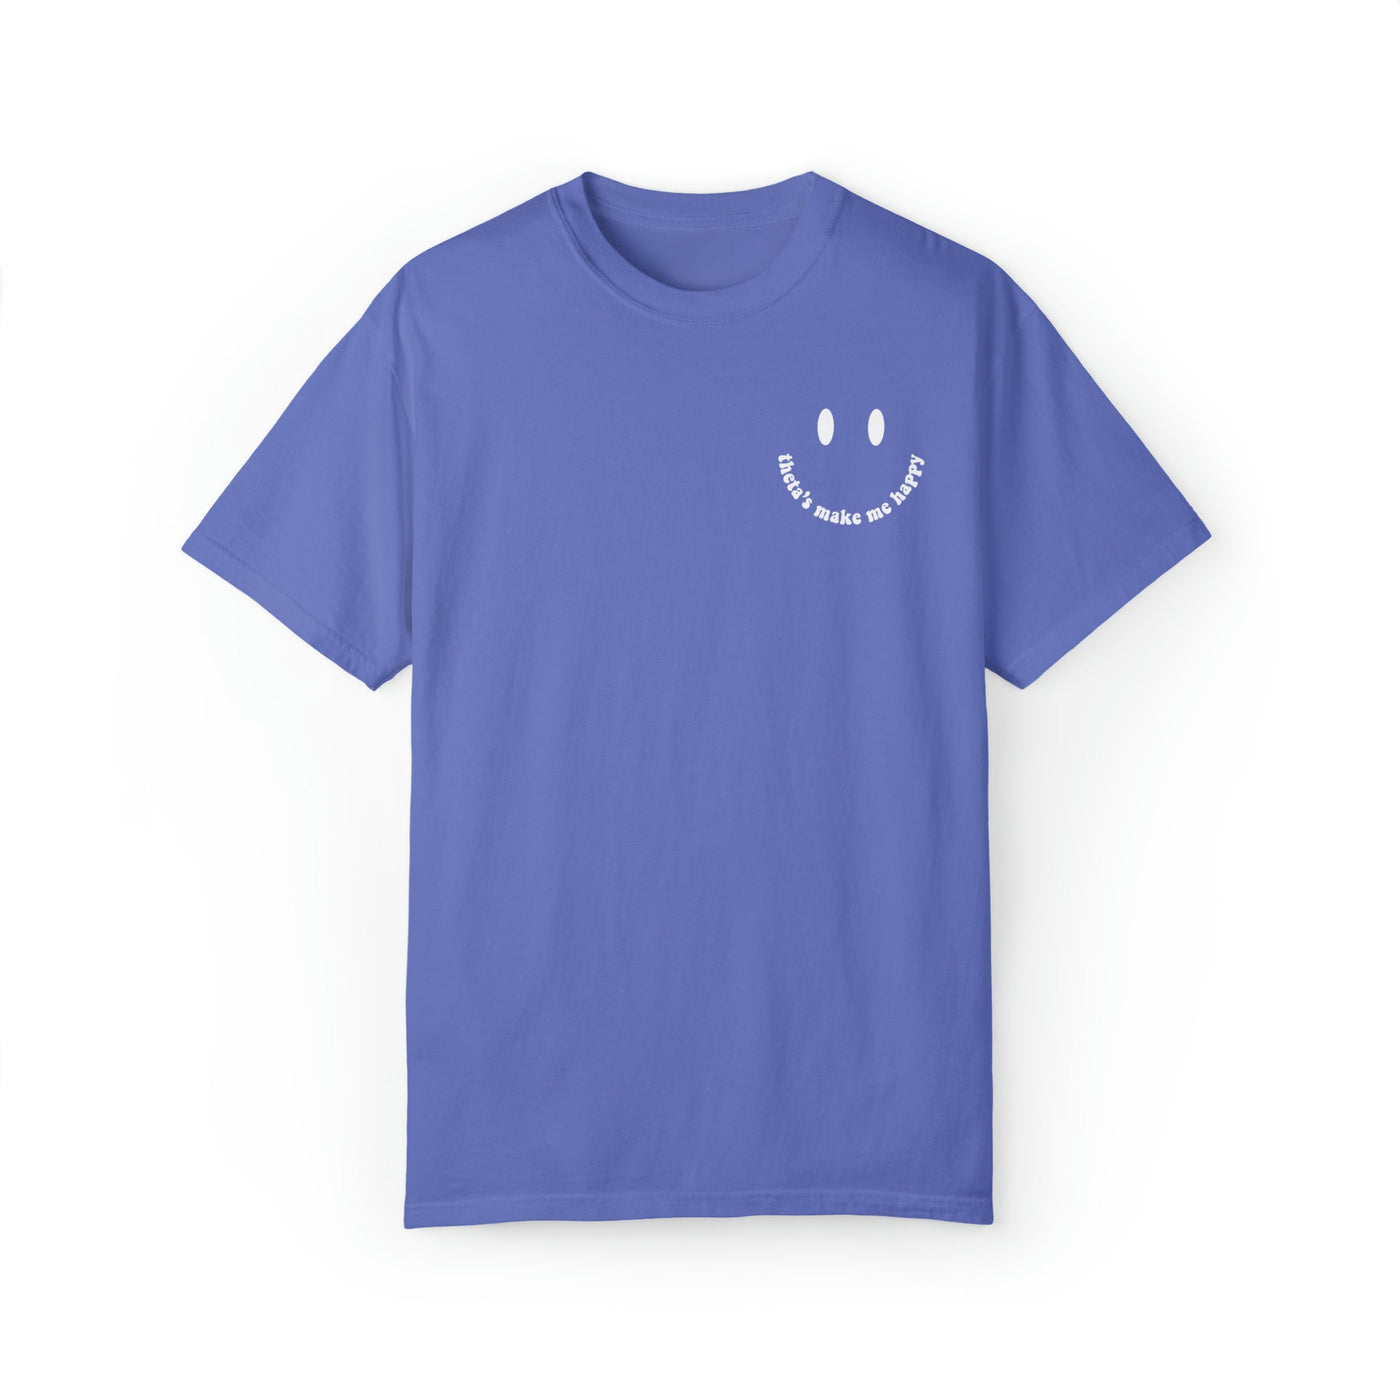 Kappa Alpha Theta's Make Me Happy Sorority Comfy T-shirt